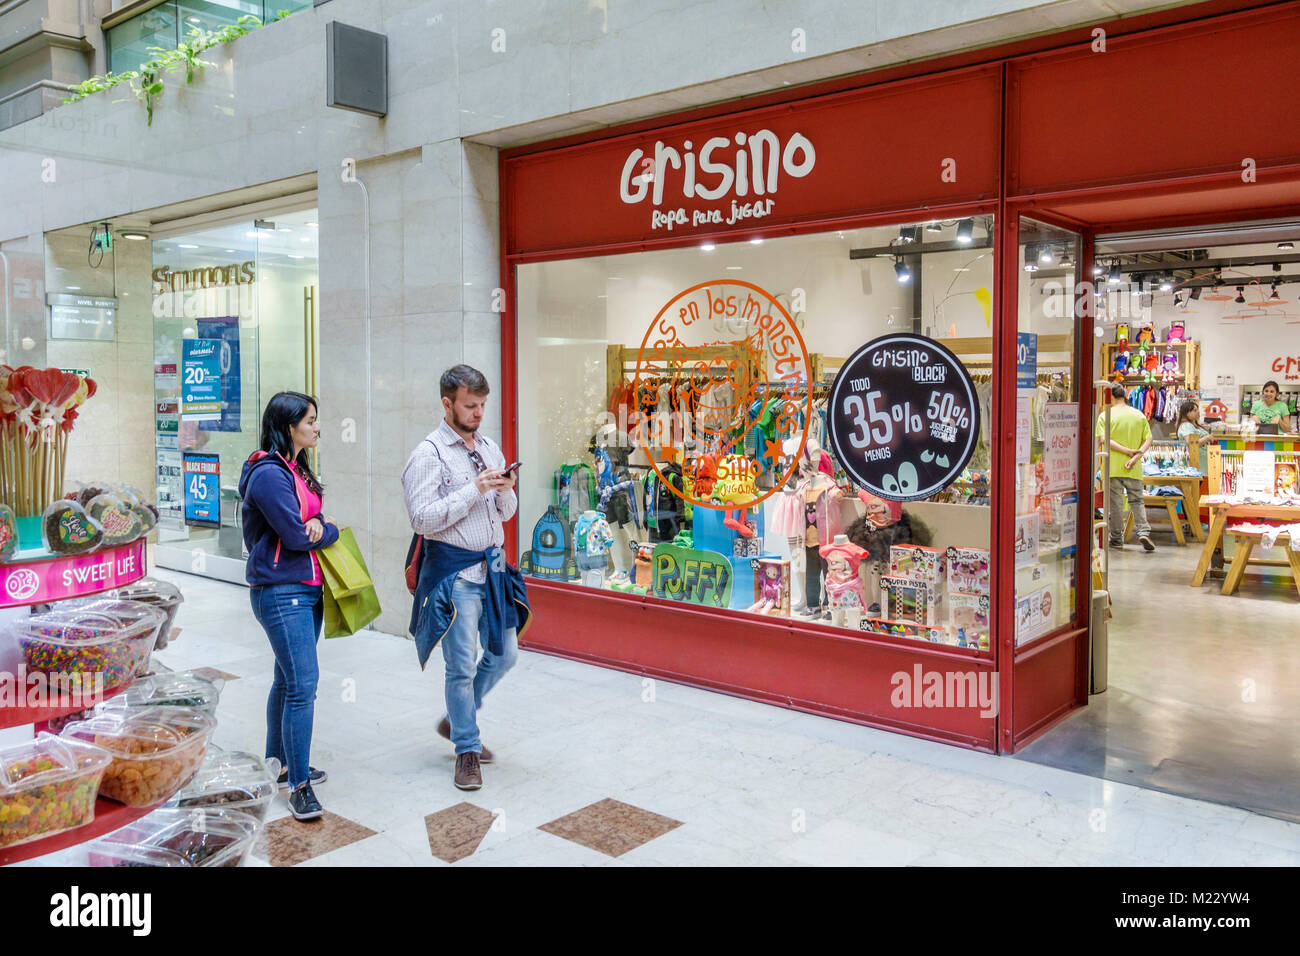 Buenos Aires Argentina,Galerias Pacifico mall,store,Grisino,children's clothes,entrance,window display,Hispanic Latin Latino ethnic minority,adult adu Stock Photo